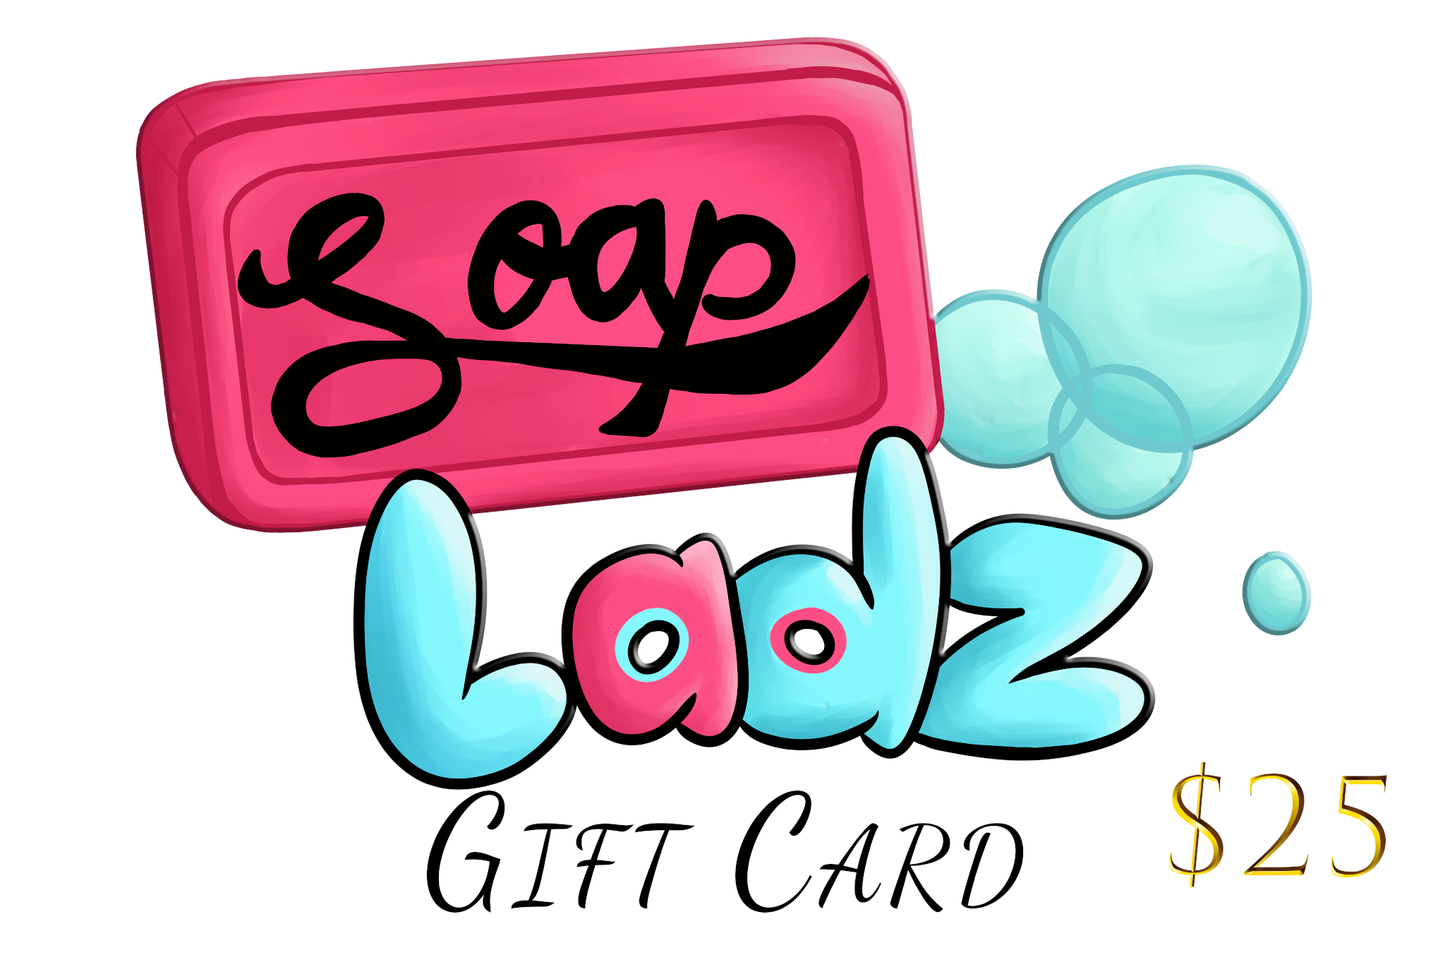 SoapLadz Gift Card